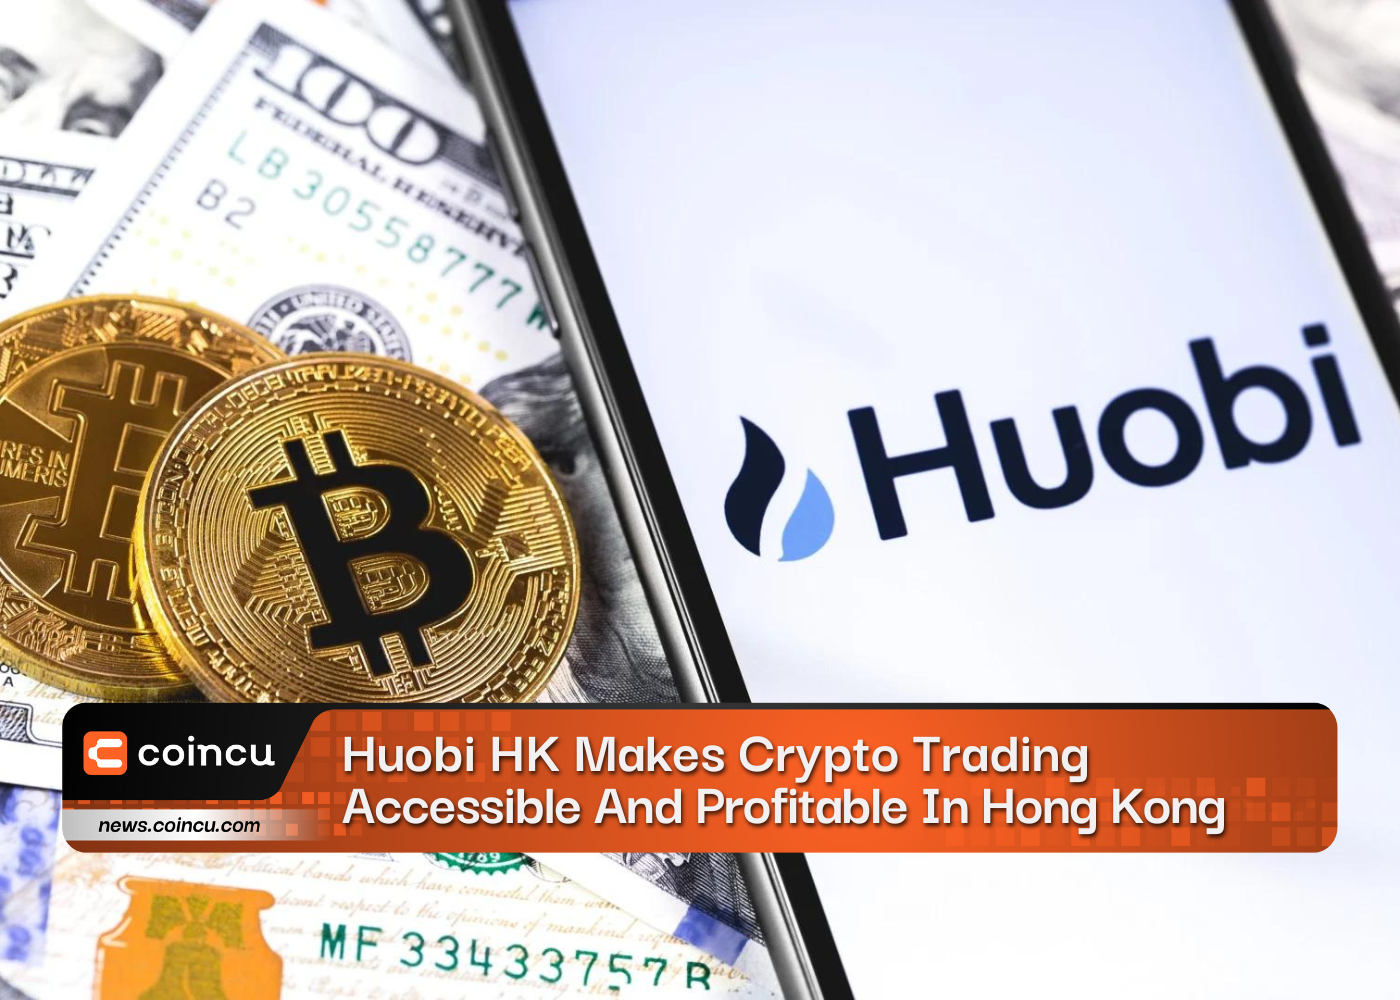 Huobi HK Makes Crypto Trading